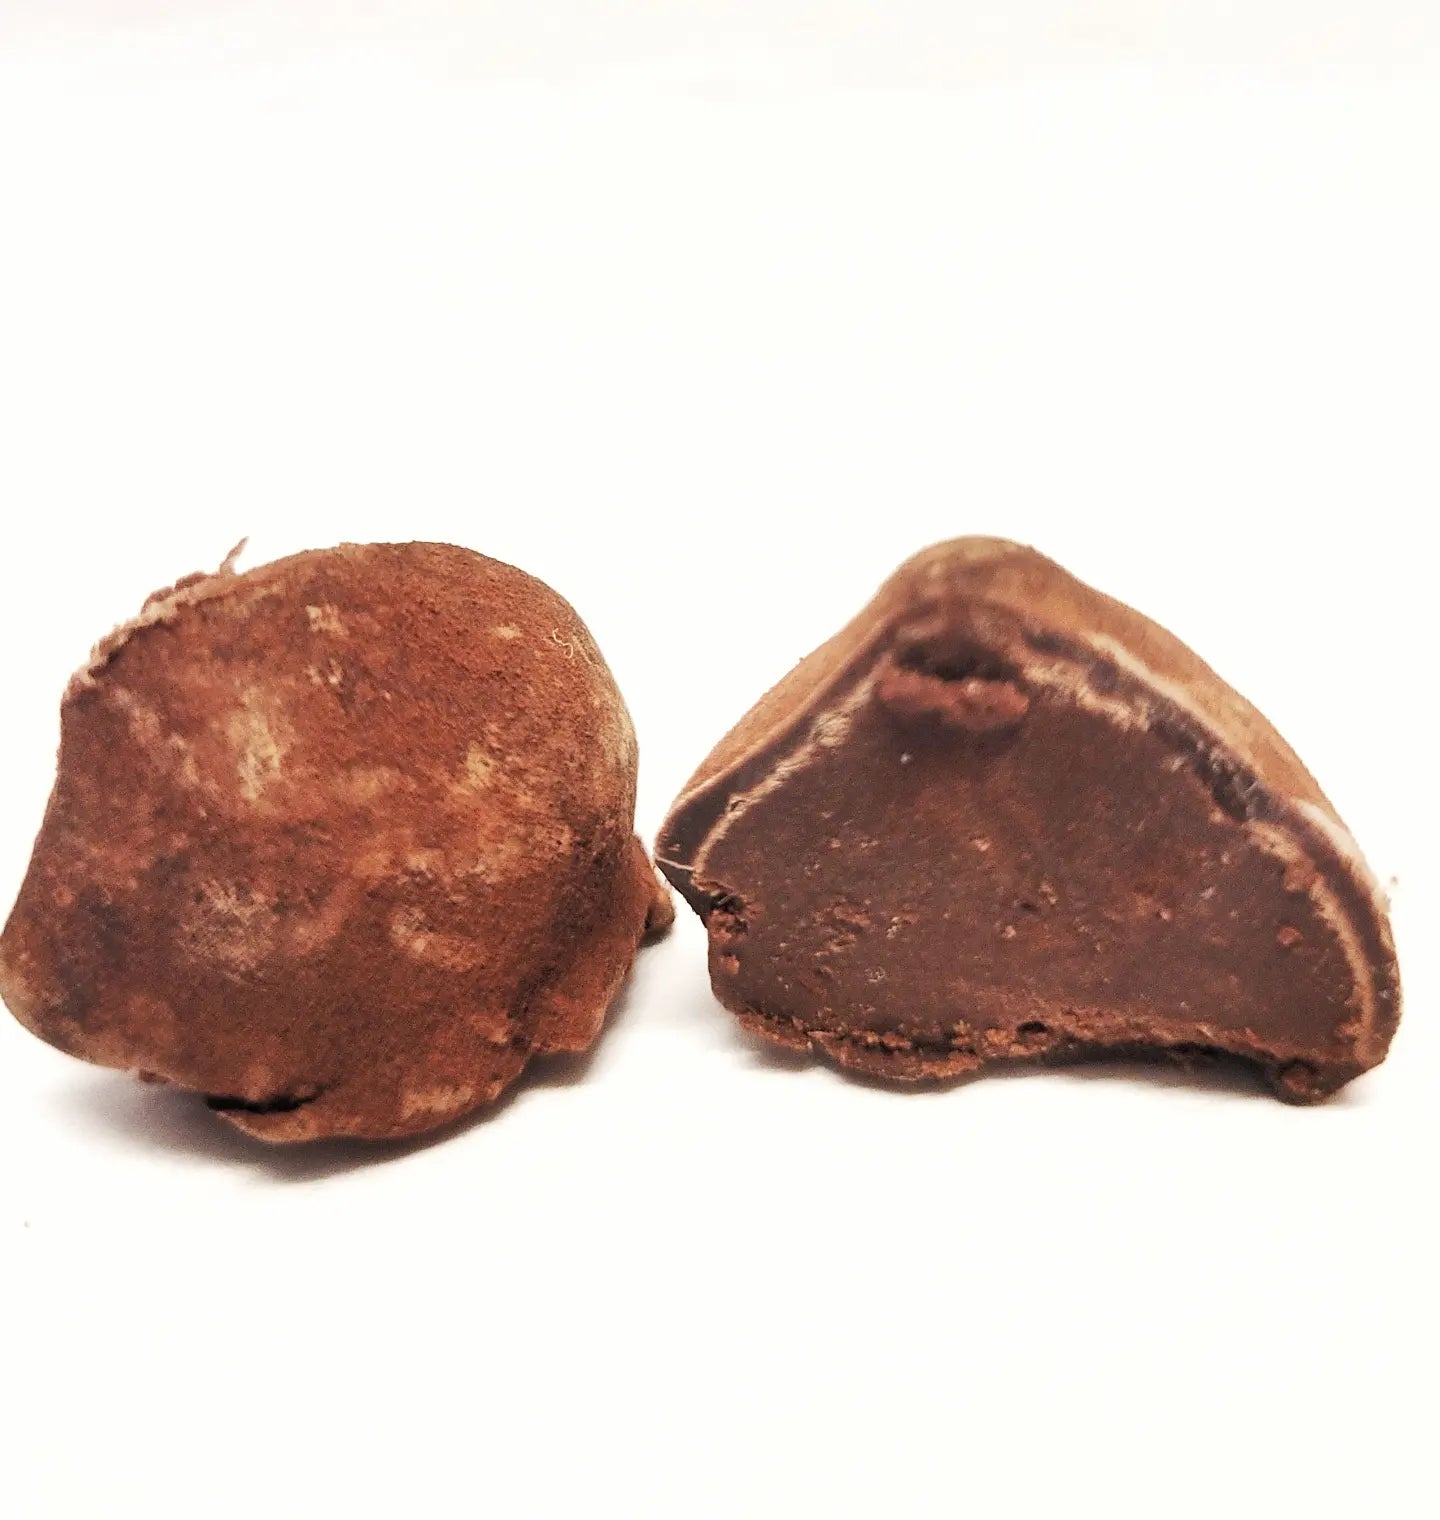 70% dark chocolate truffle chocofellar chocolatier bc canada